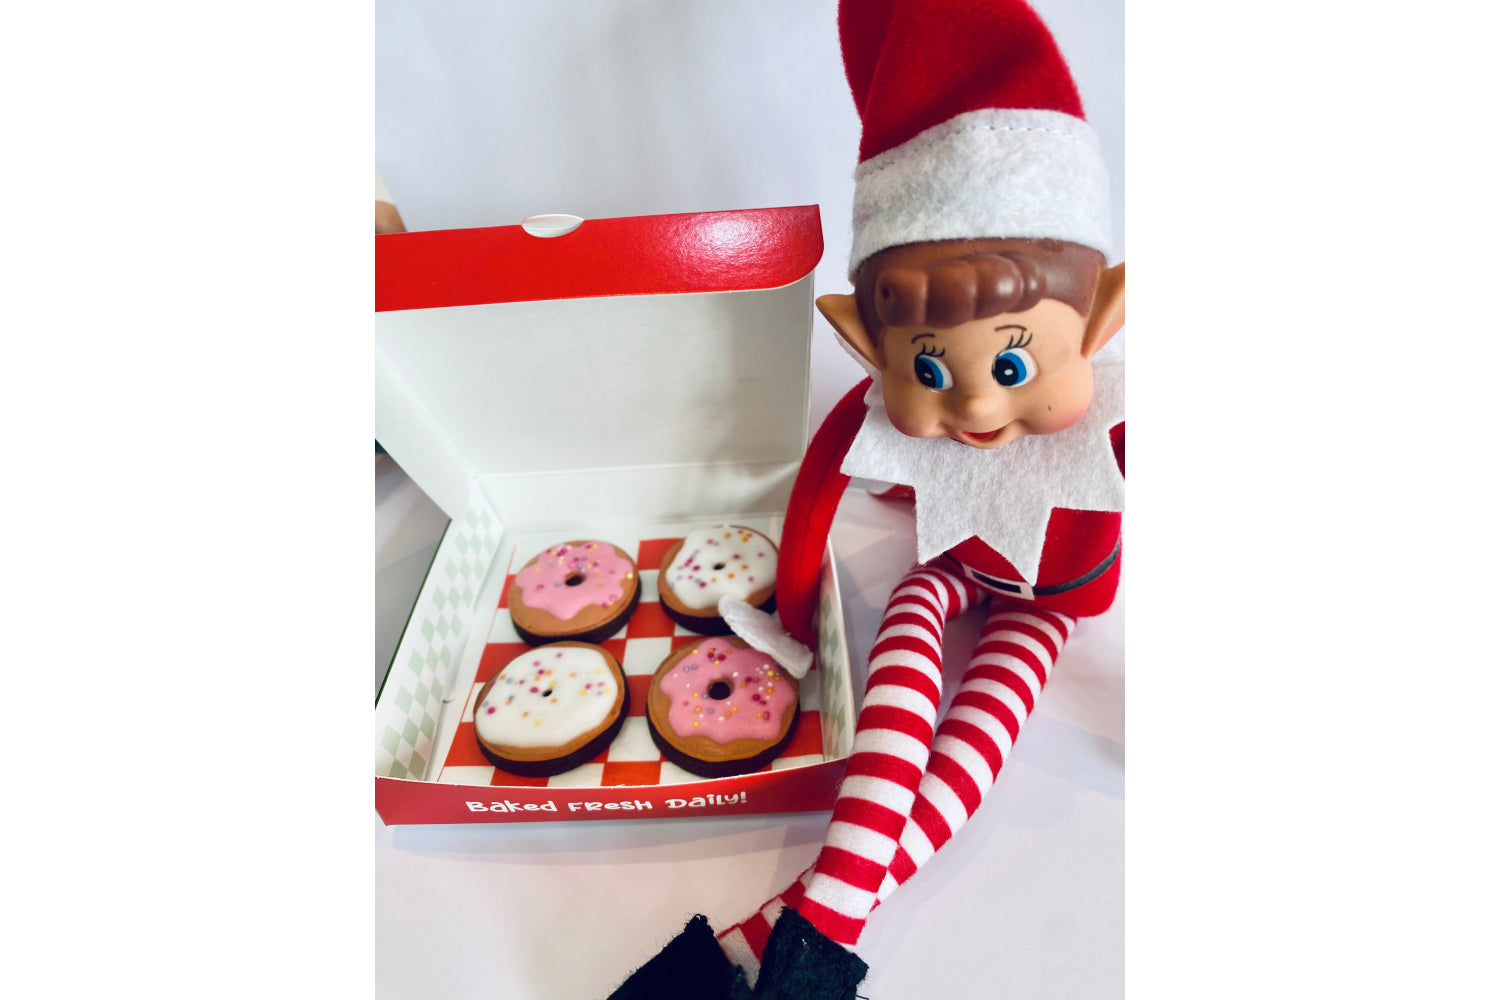 Elf on the shelf mini biscuits to look like Elf doughnuts. mini doughnut cookies in an elf delivery box.